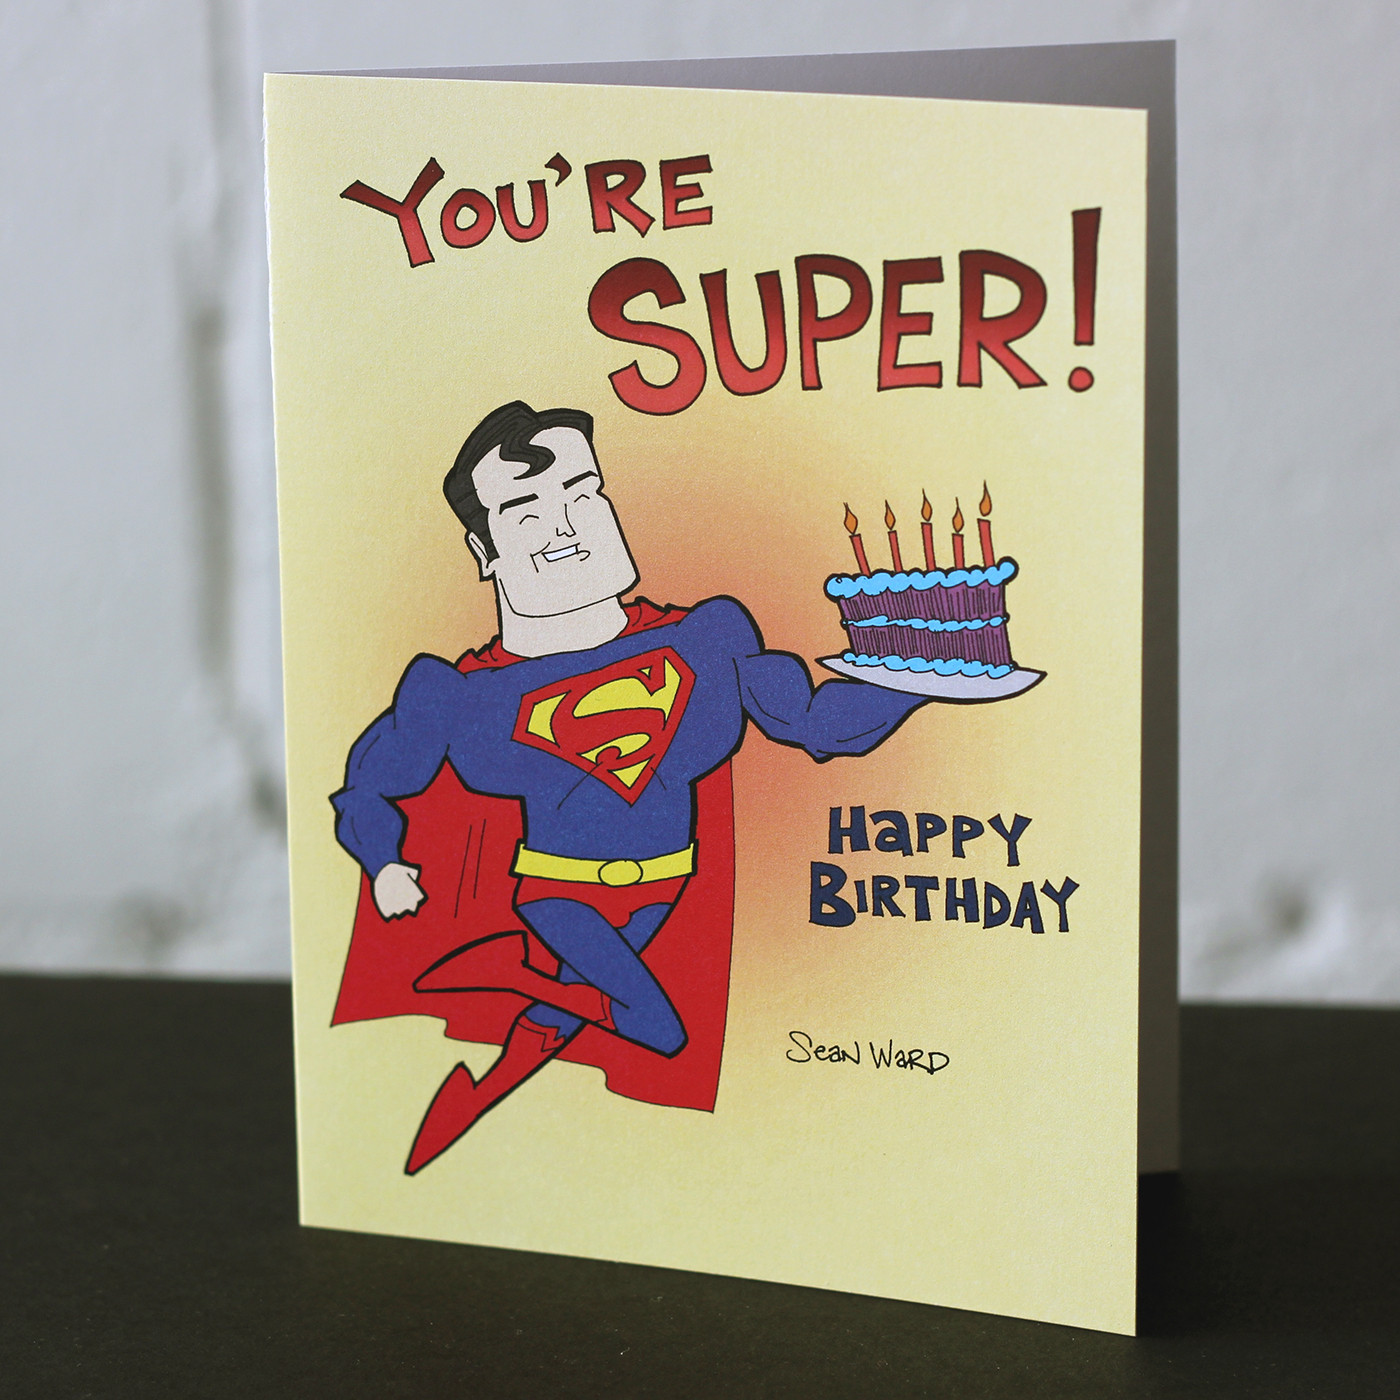 Superhero Birthday Card
 Superhero Birthday Cards on Behance